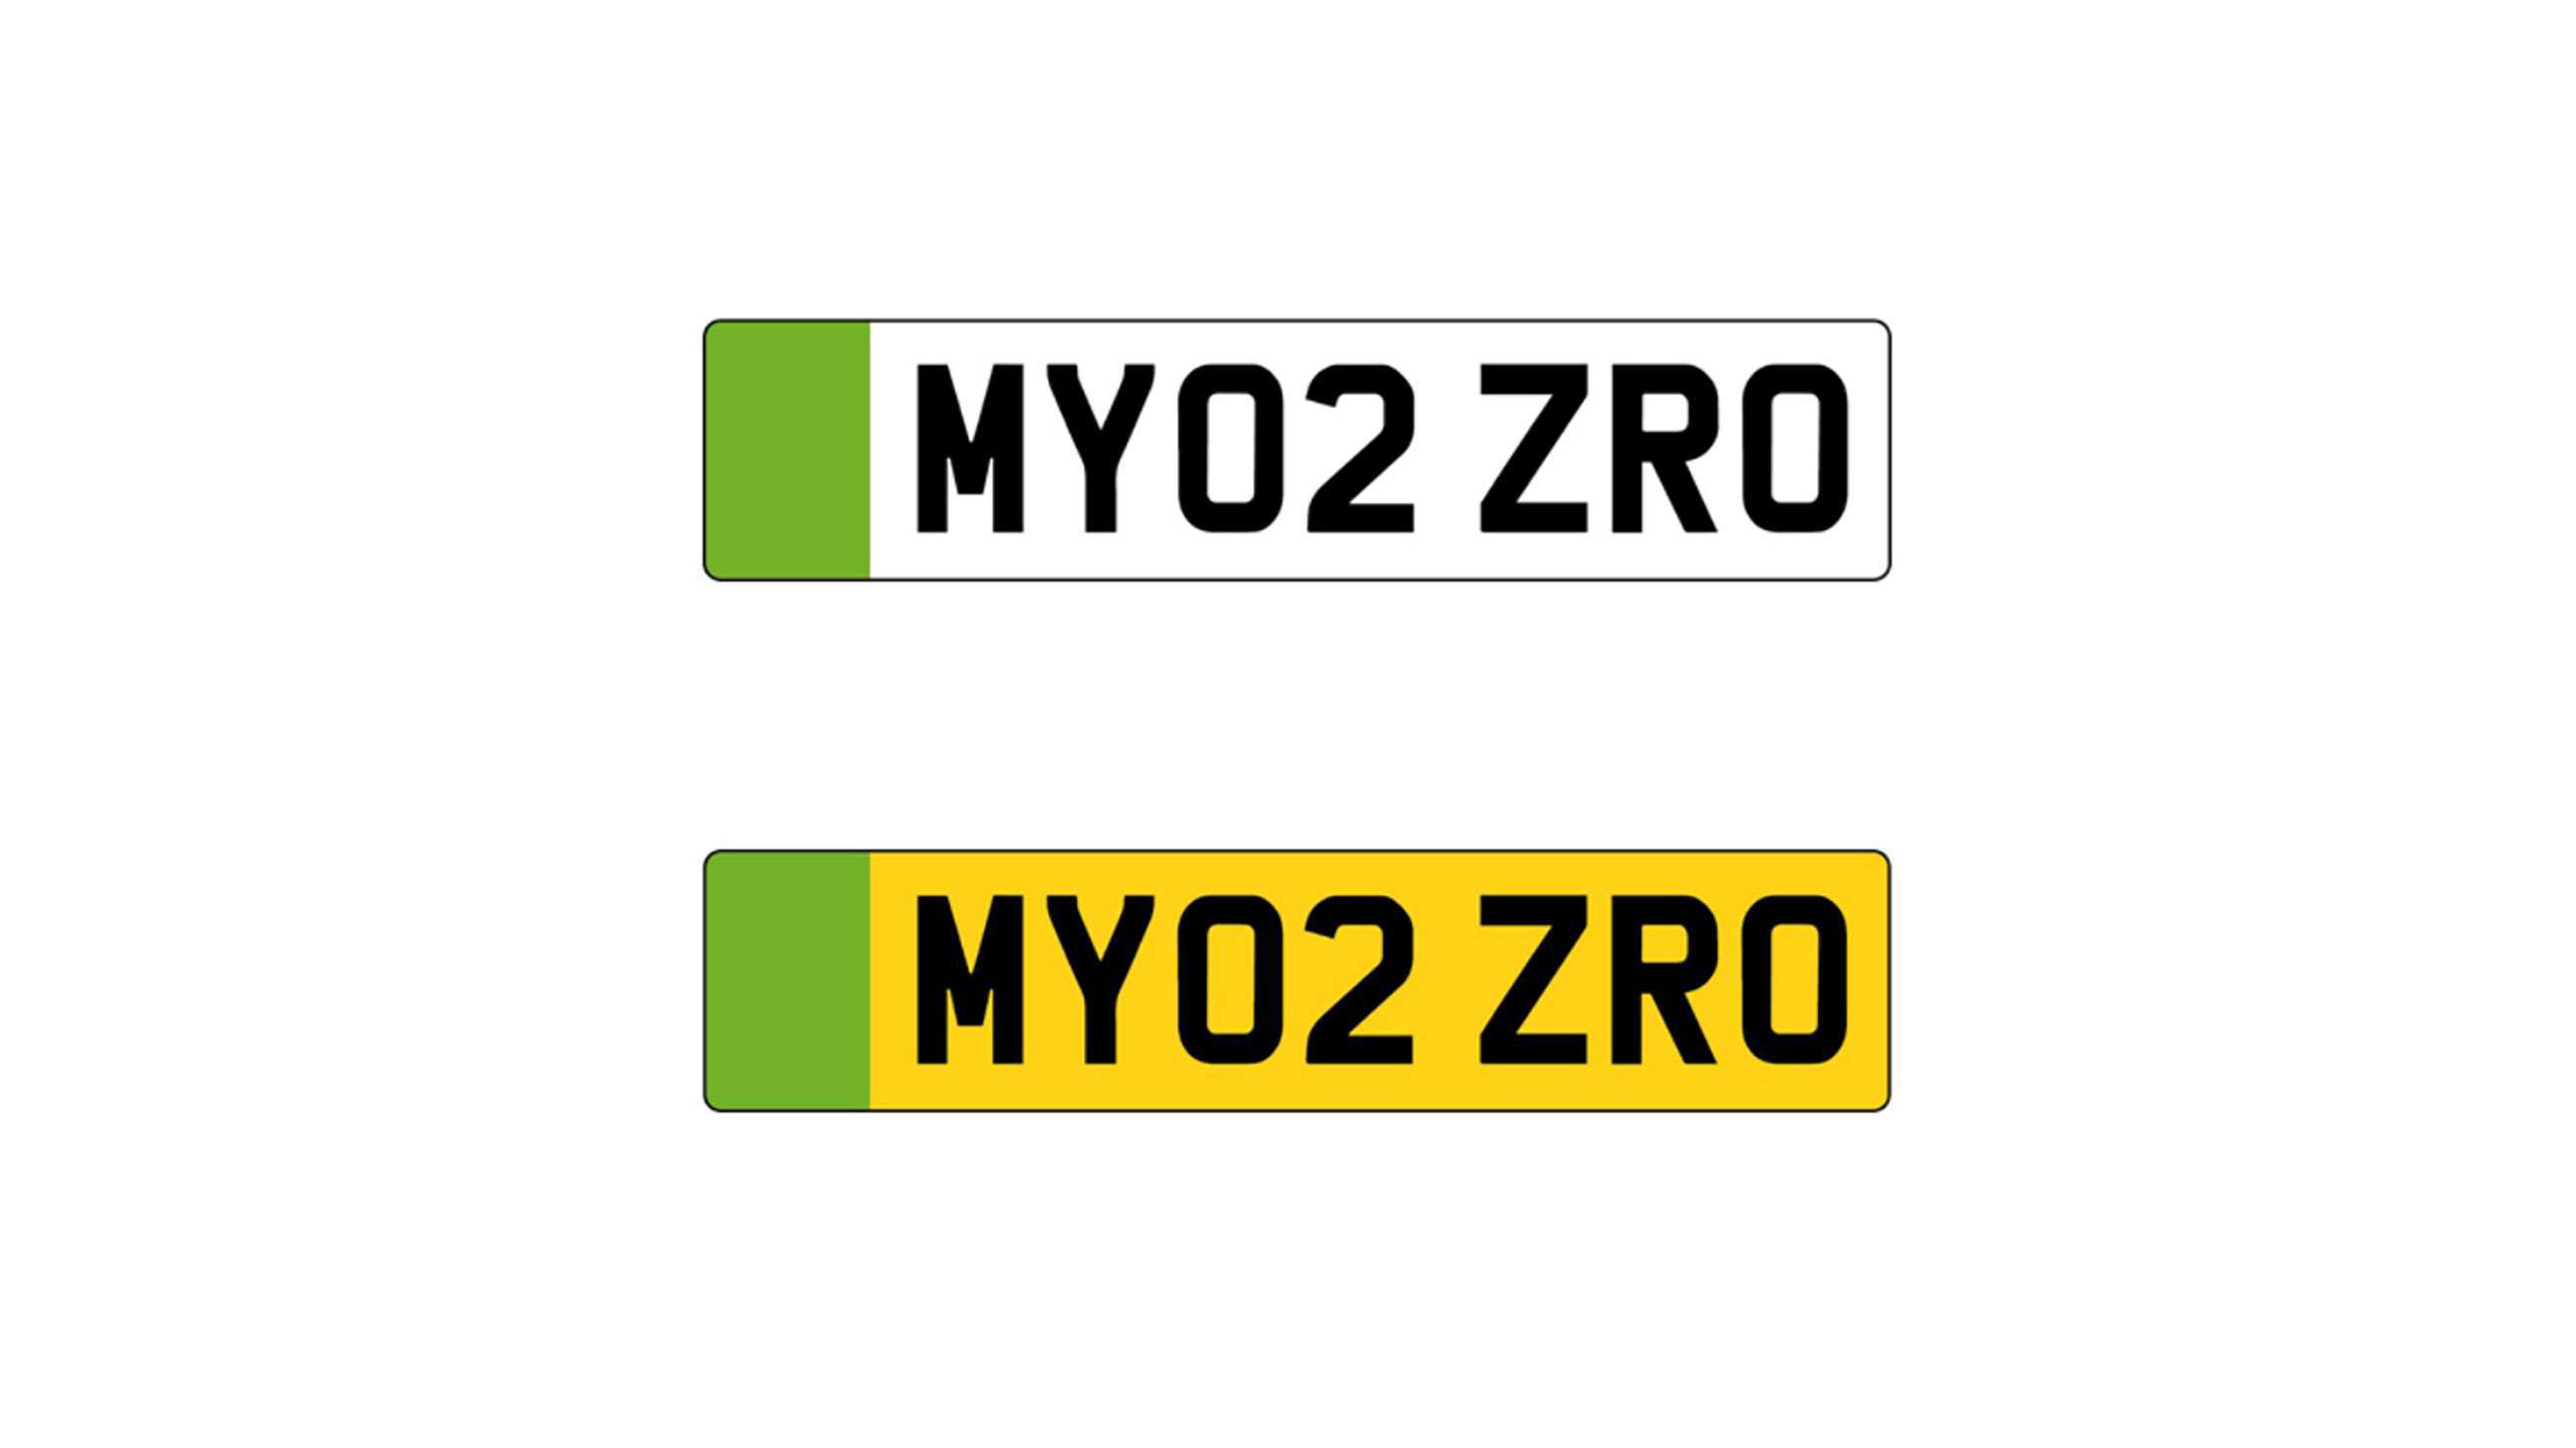 green-number-plate-uk-zero-emission-goodwood-18062020.jpg